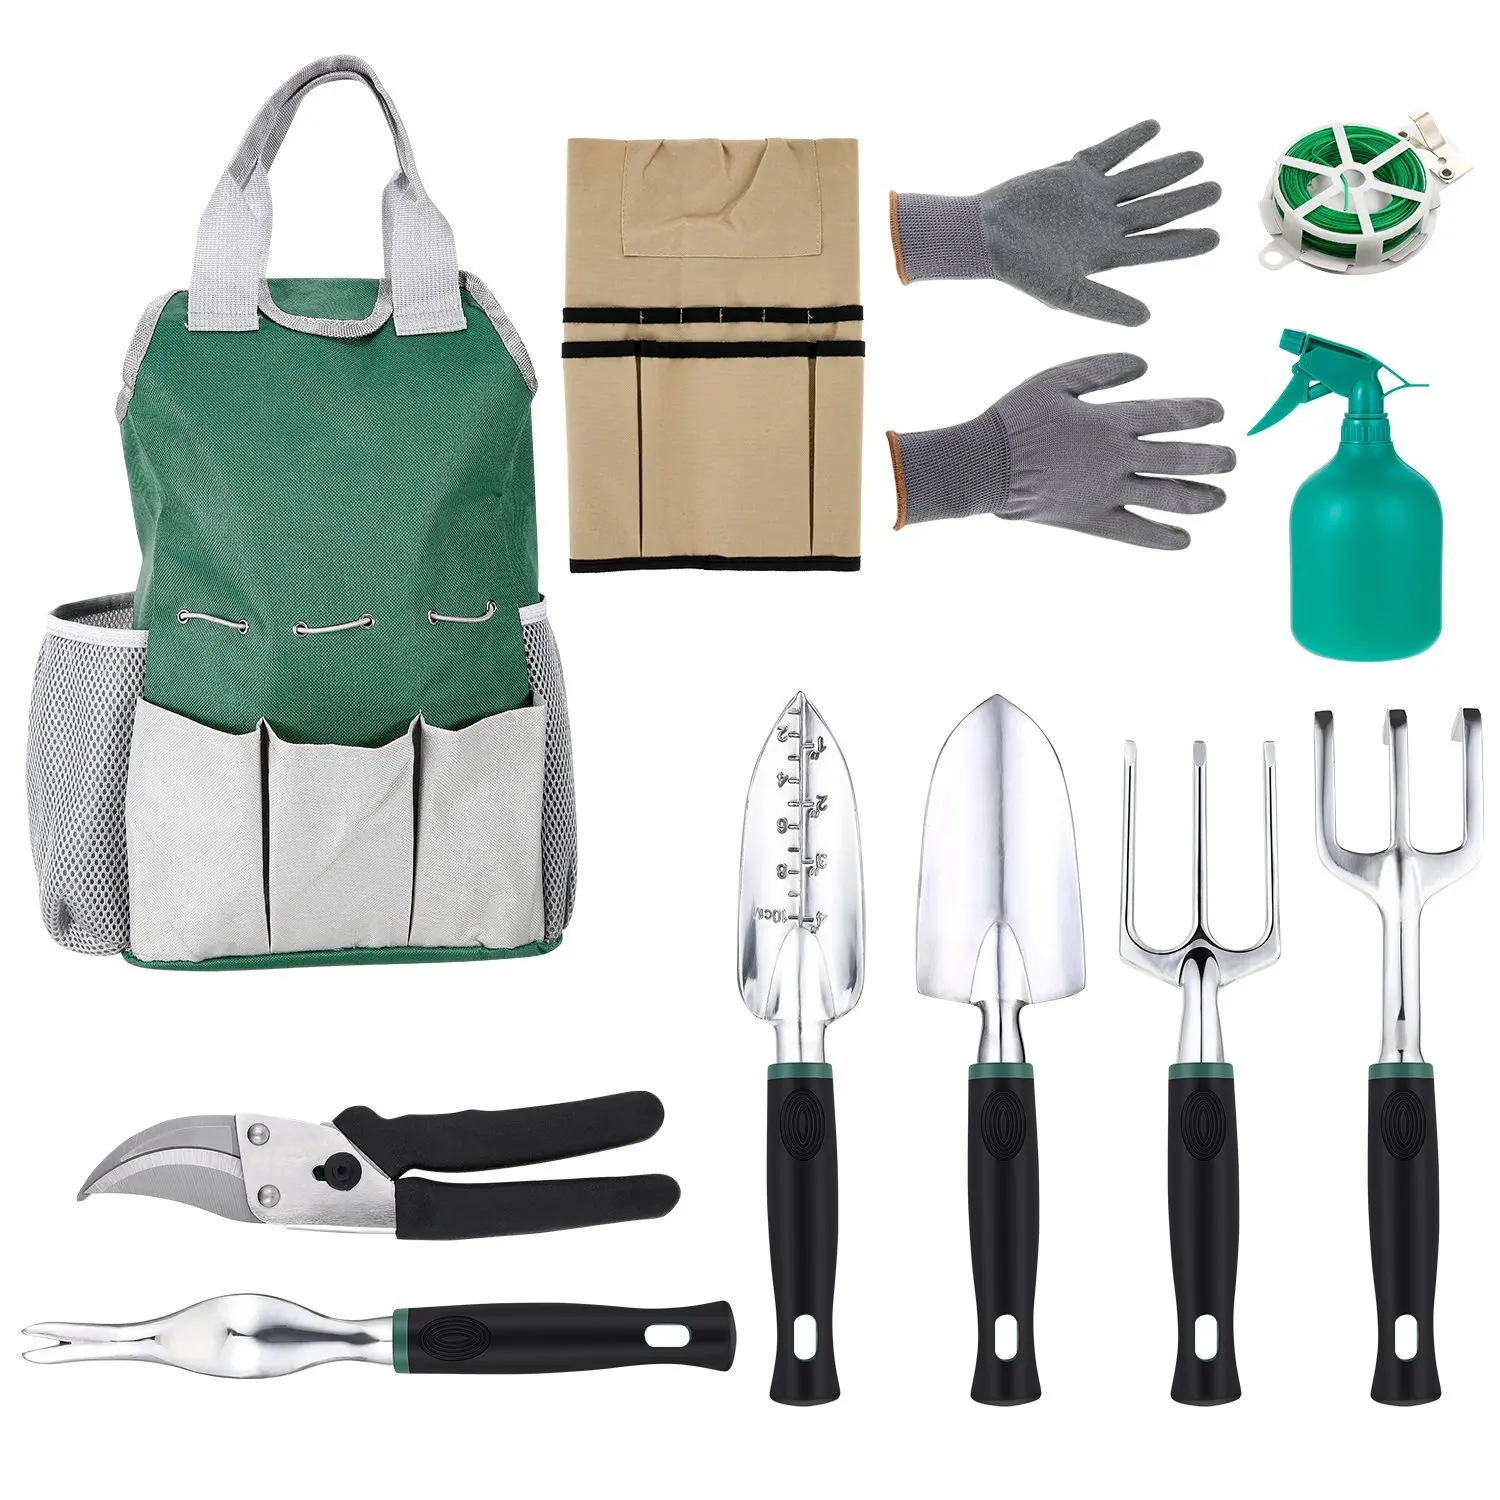 Buy 11 Pieces Garden Tool Sets Including:Tool Organiser Bag,Apron,6 ...